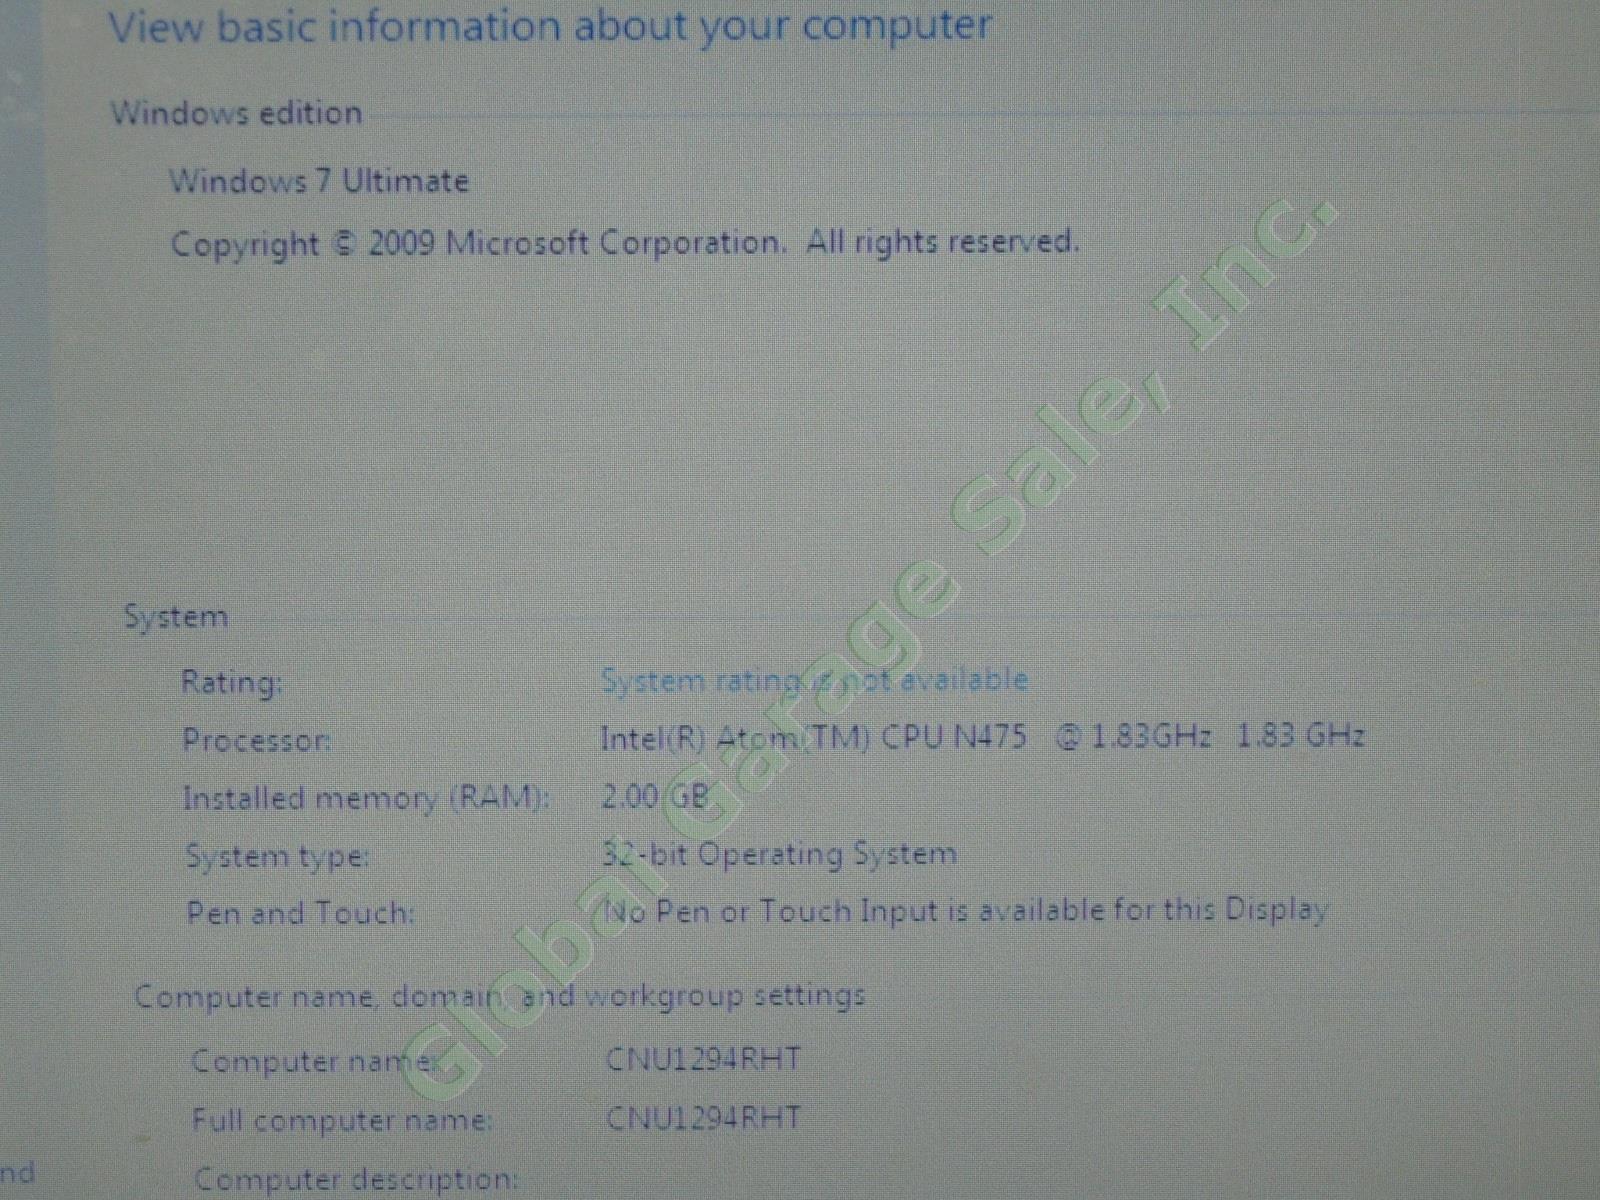 HP Mini 5103 10.1" Netbook Laptop Intel Atom 1.83GHz 2GB RAM 160GB HDD Windows 7 1